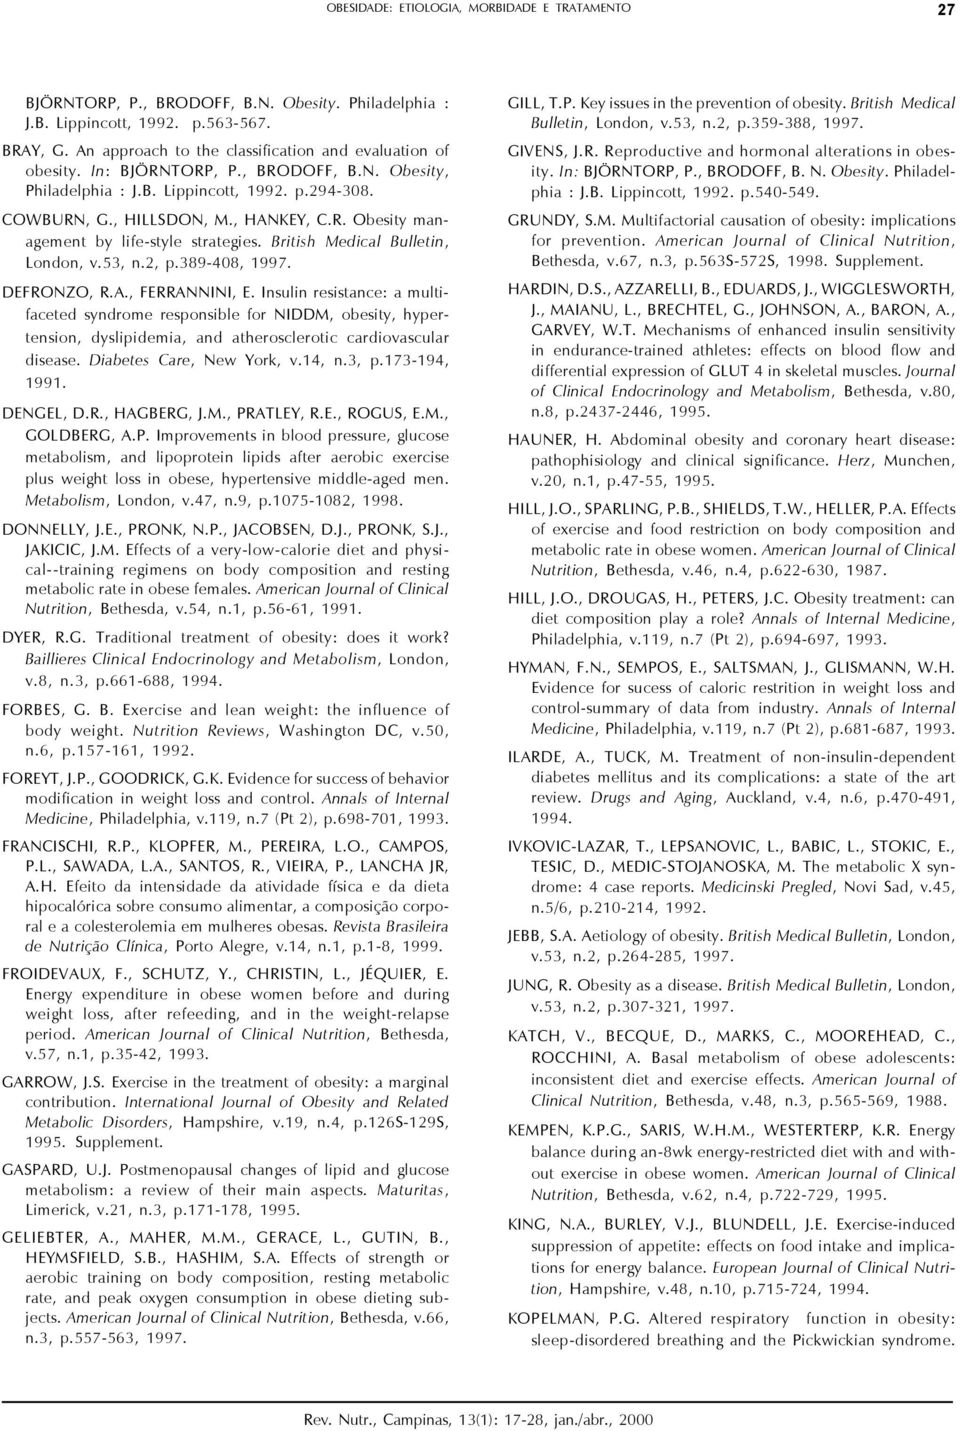 British Medical Bulletin, London, v.53, n.2, p.389-408, 1997. DEFRONZO, R.A., FERRANNINI, E.